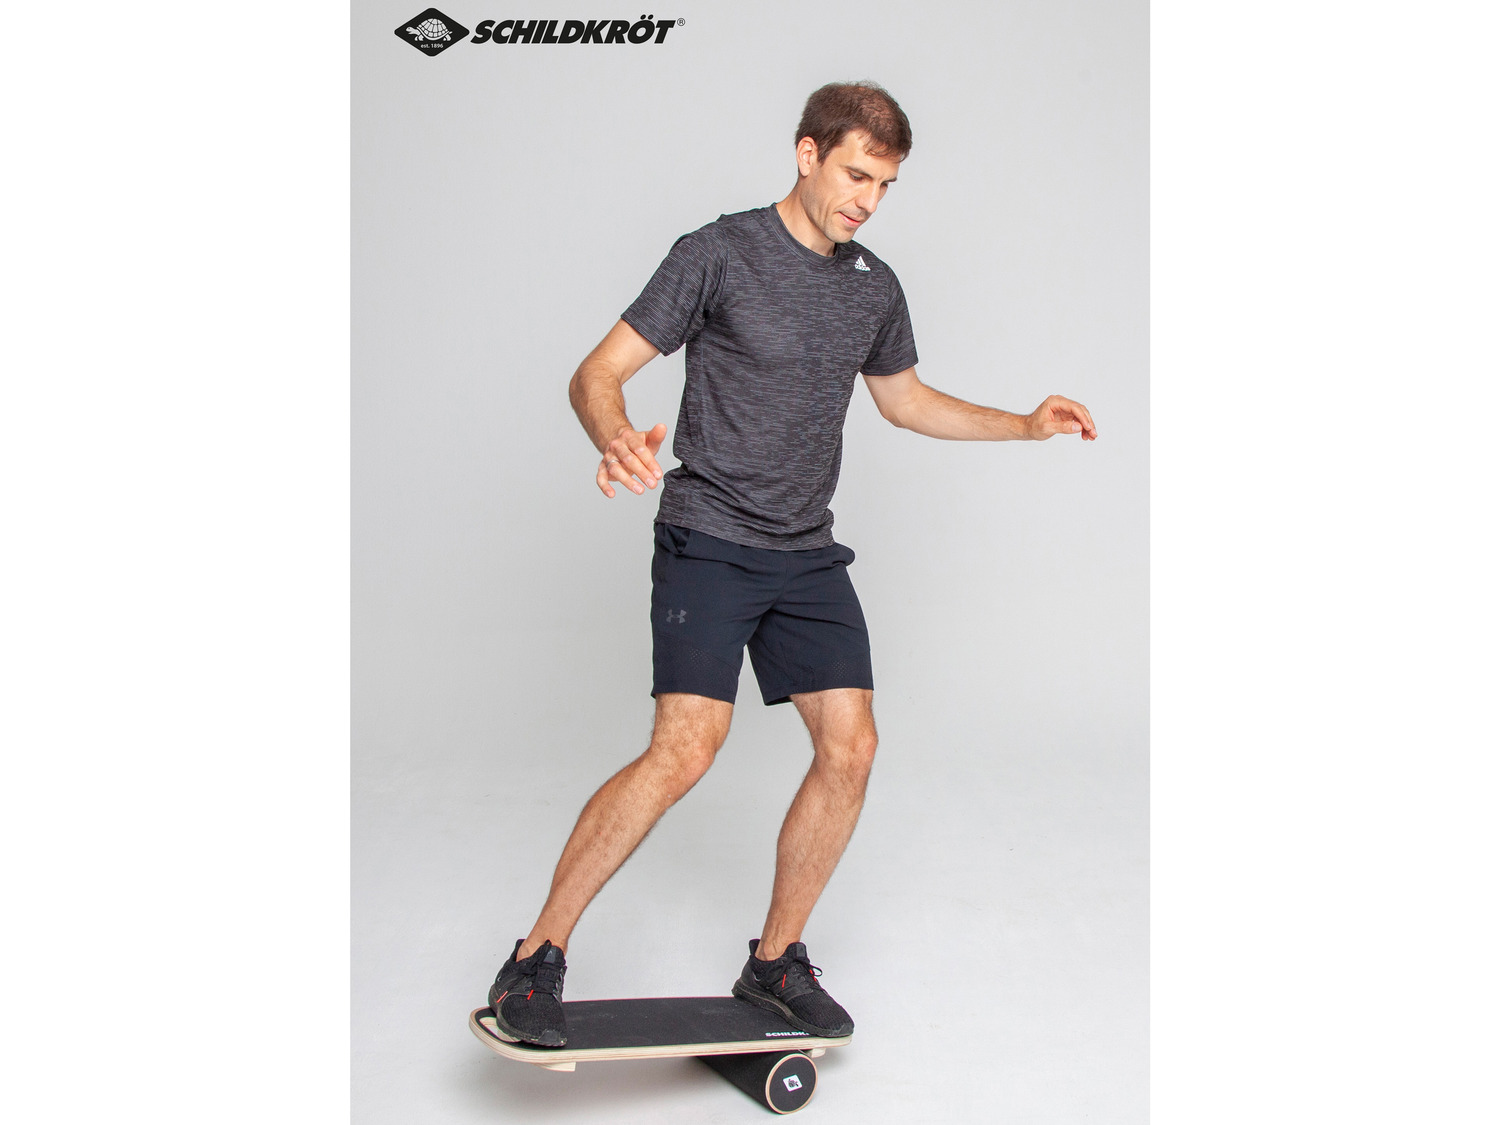 Schildkröt Fitness Wooden Balance Board | LIDL